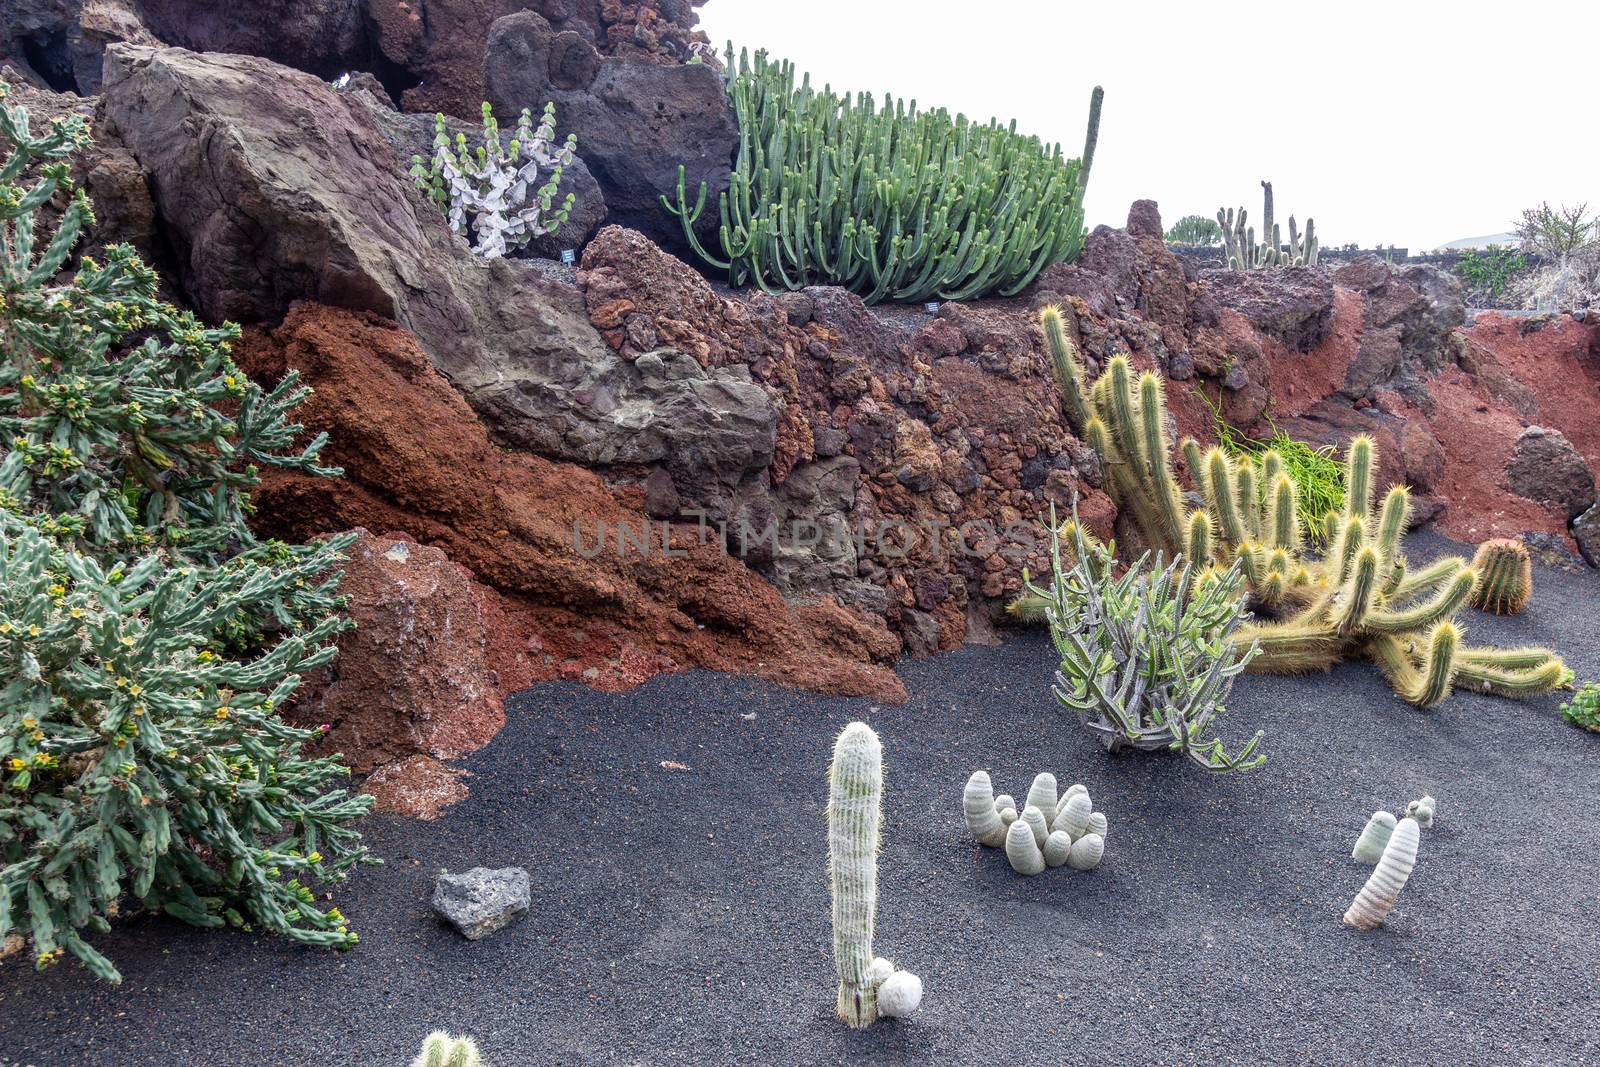 Different types of cactus in Jardin de Cactus by Cesar Manrique on canary island Lanzarote, Spain